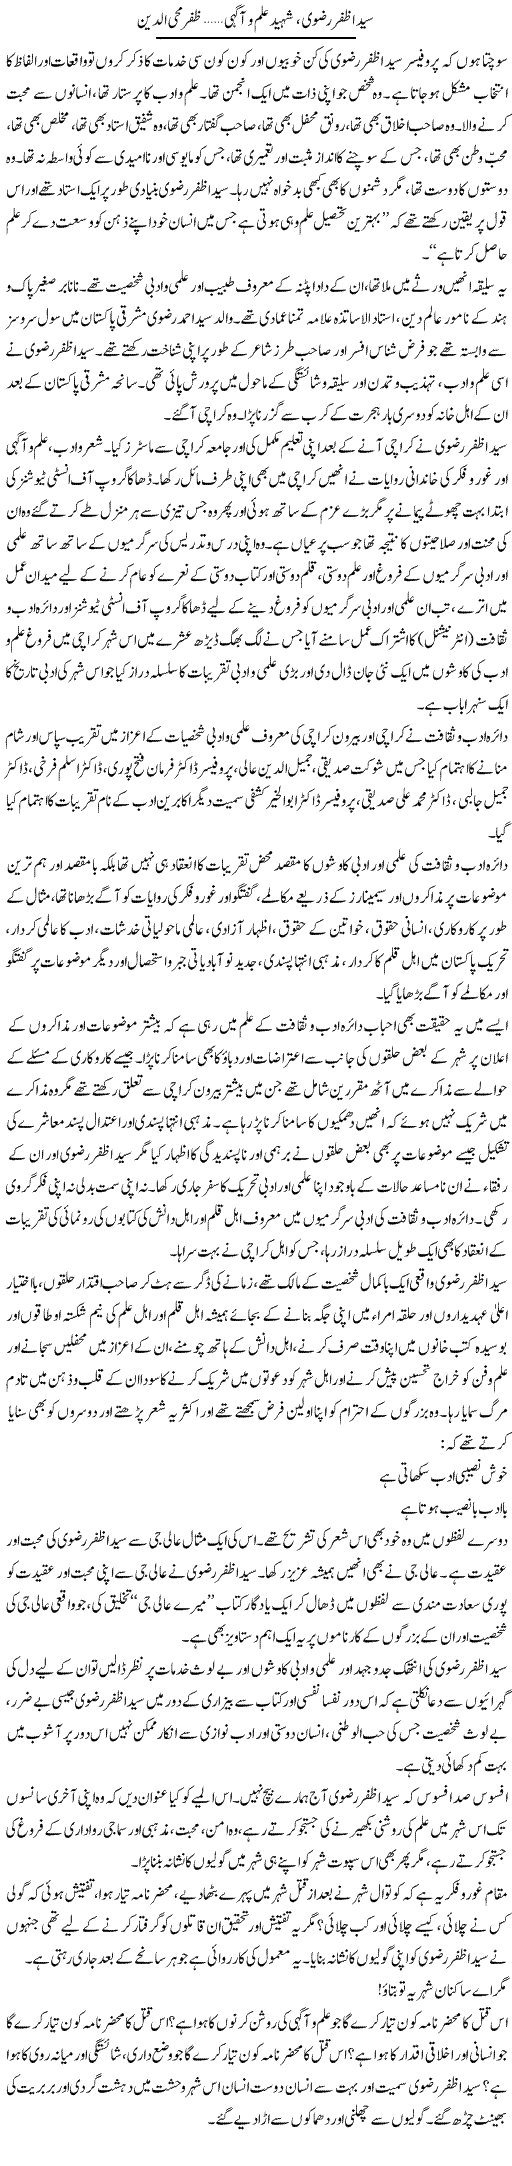 Syed Azhfar Rizvi Shaheed Alam O Aagahi | Zafar Muhayyudin | Daily Urdu Columns